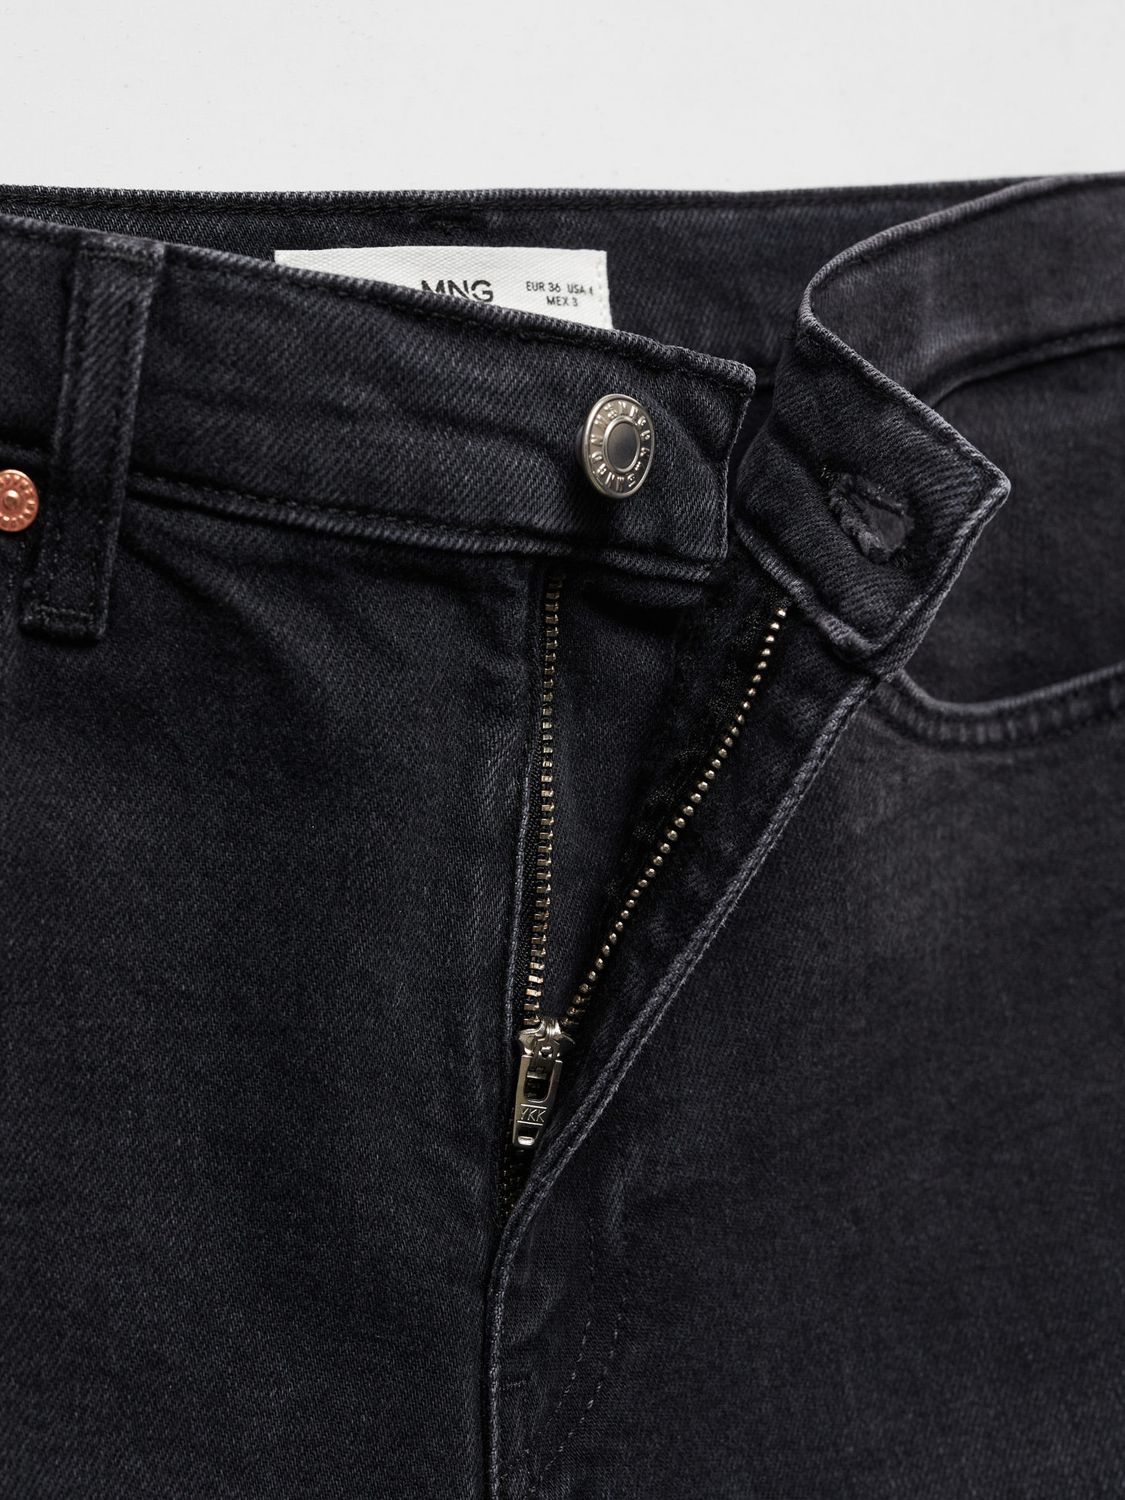 Mango Claudia Slim Jeans, Open Grey at John Lewis & Partners